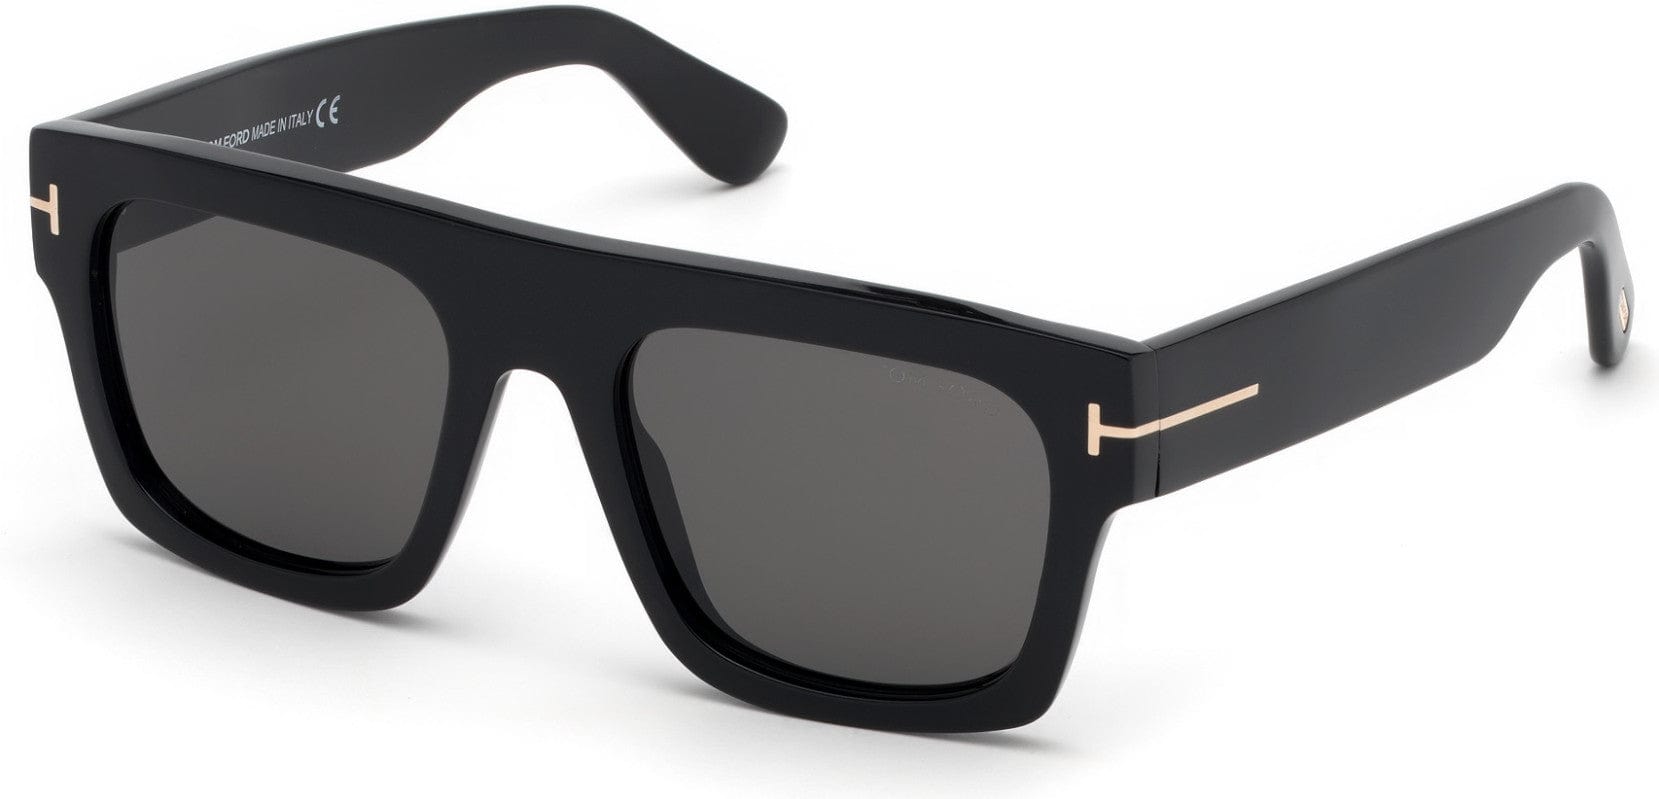 Tom Ford FT0711 Fausto Geometric Sunglasses 01A-01A - Shiny Black / Smoke Lenses